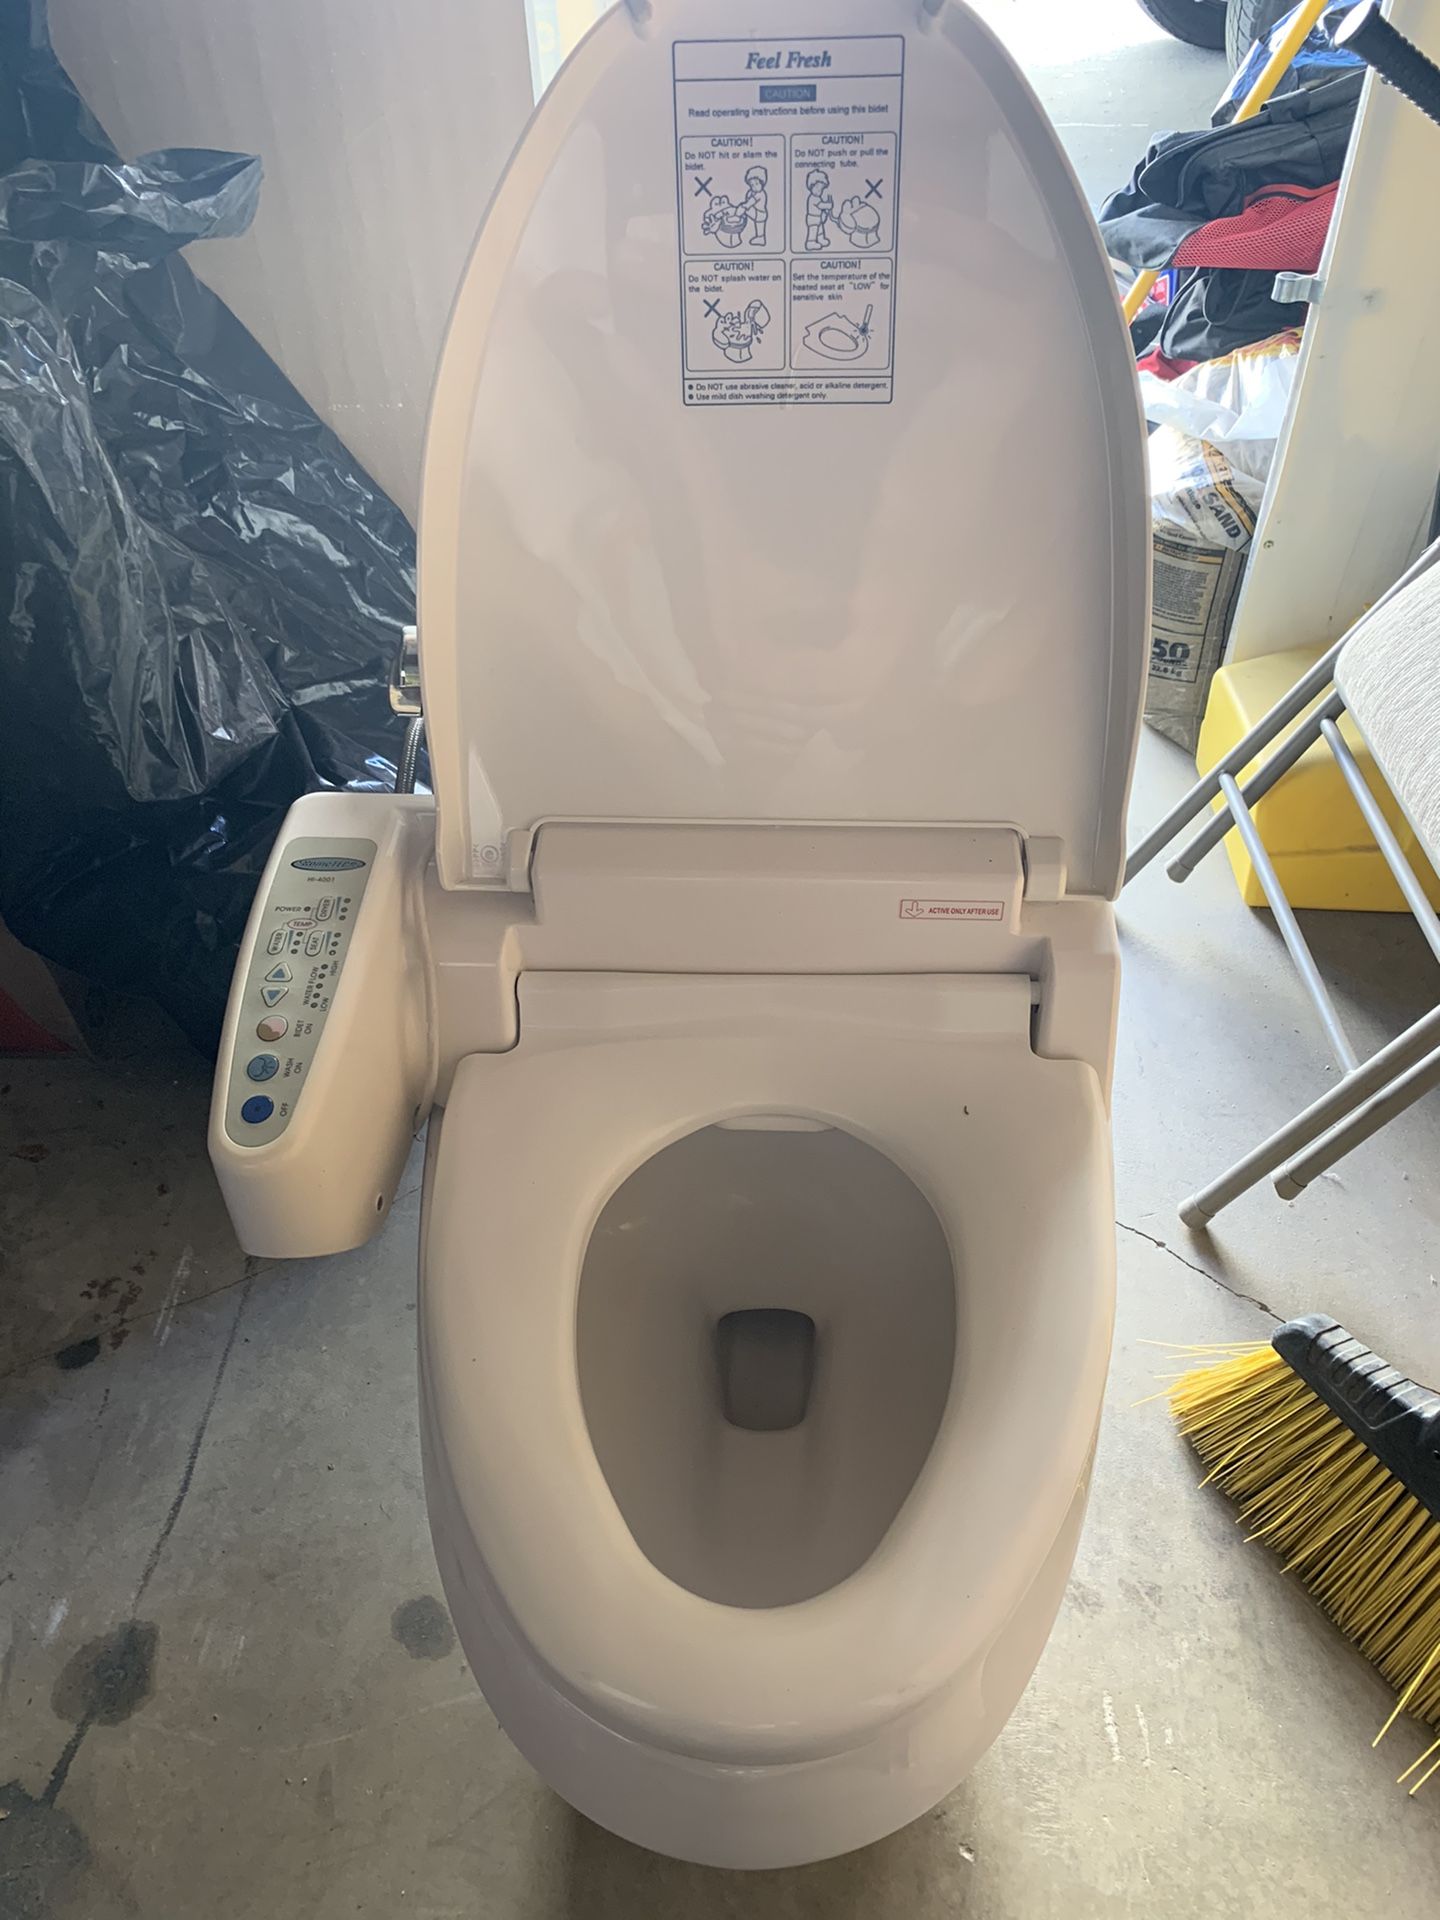 Free toilet w/ heated seat, bidet, light